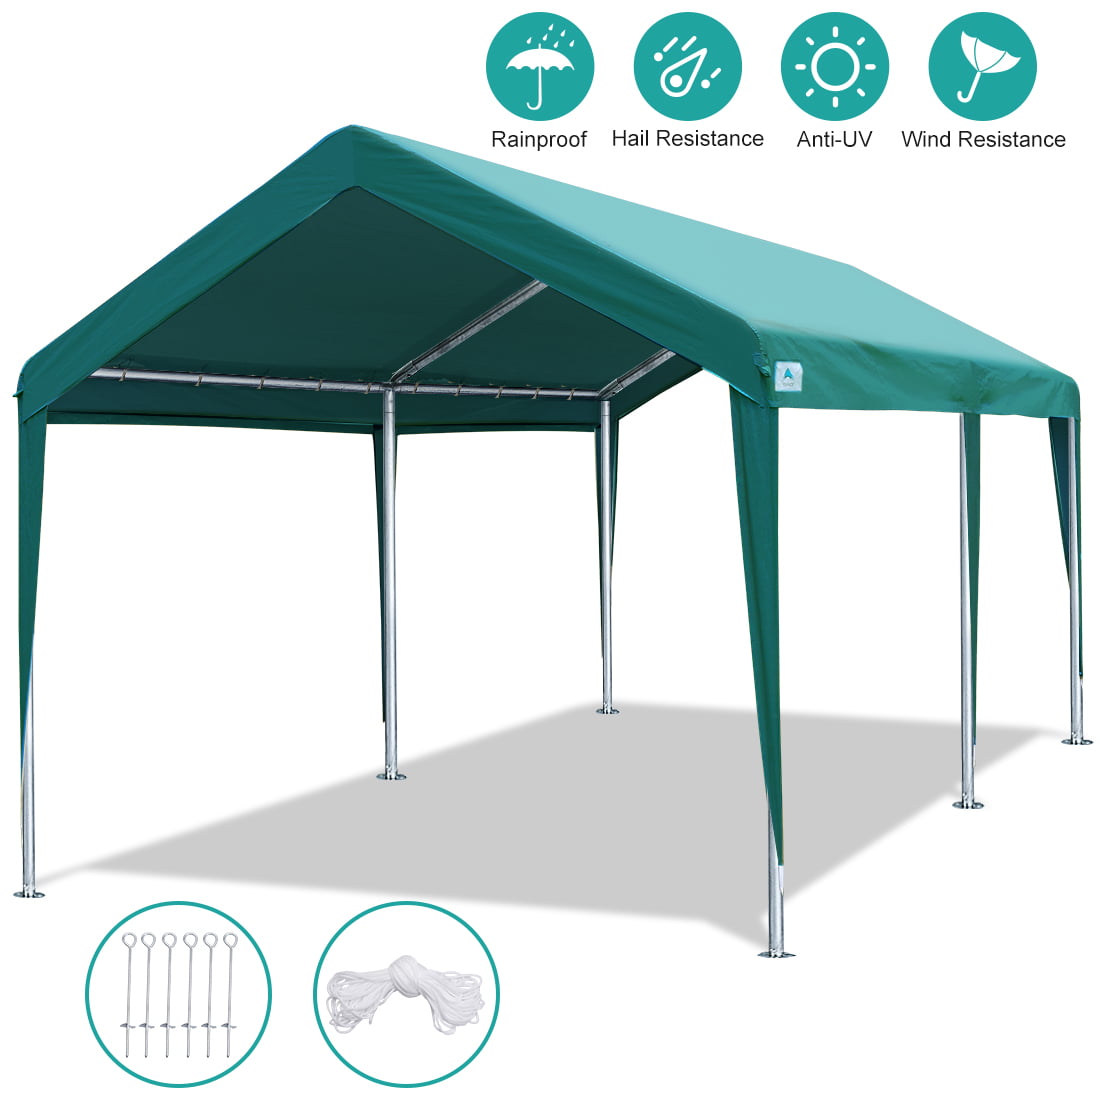 10x20 FT Carport Canopy Tent Steel Heavy Duty Outdoor Portable Car Shelter 6 Leg